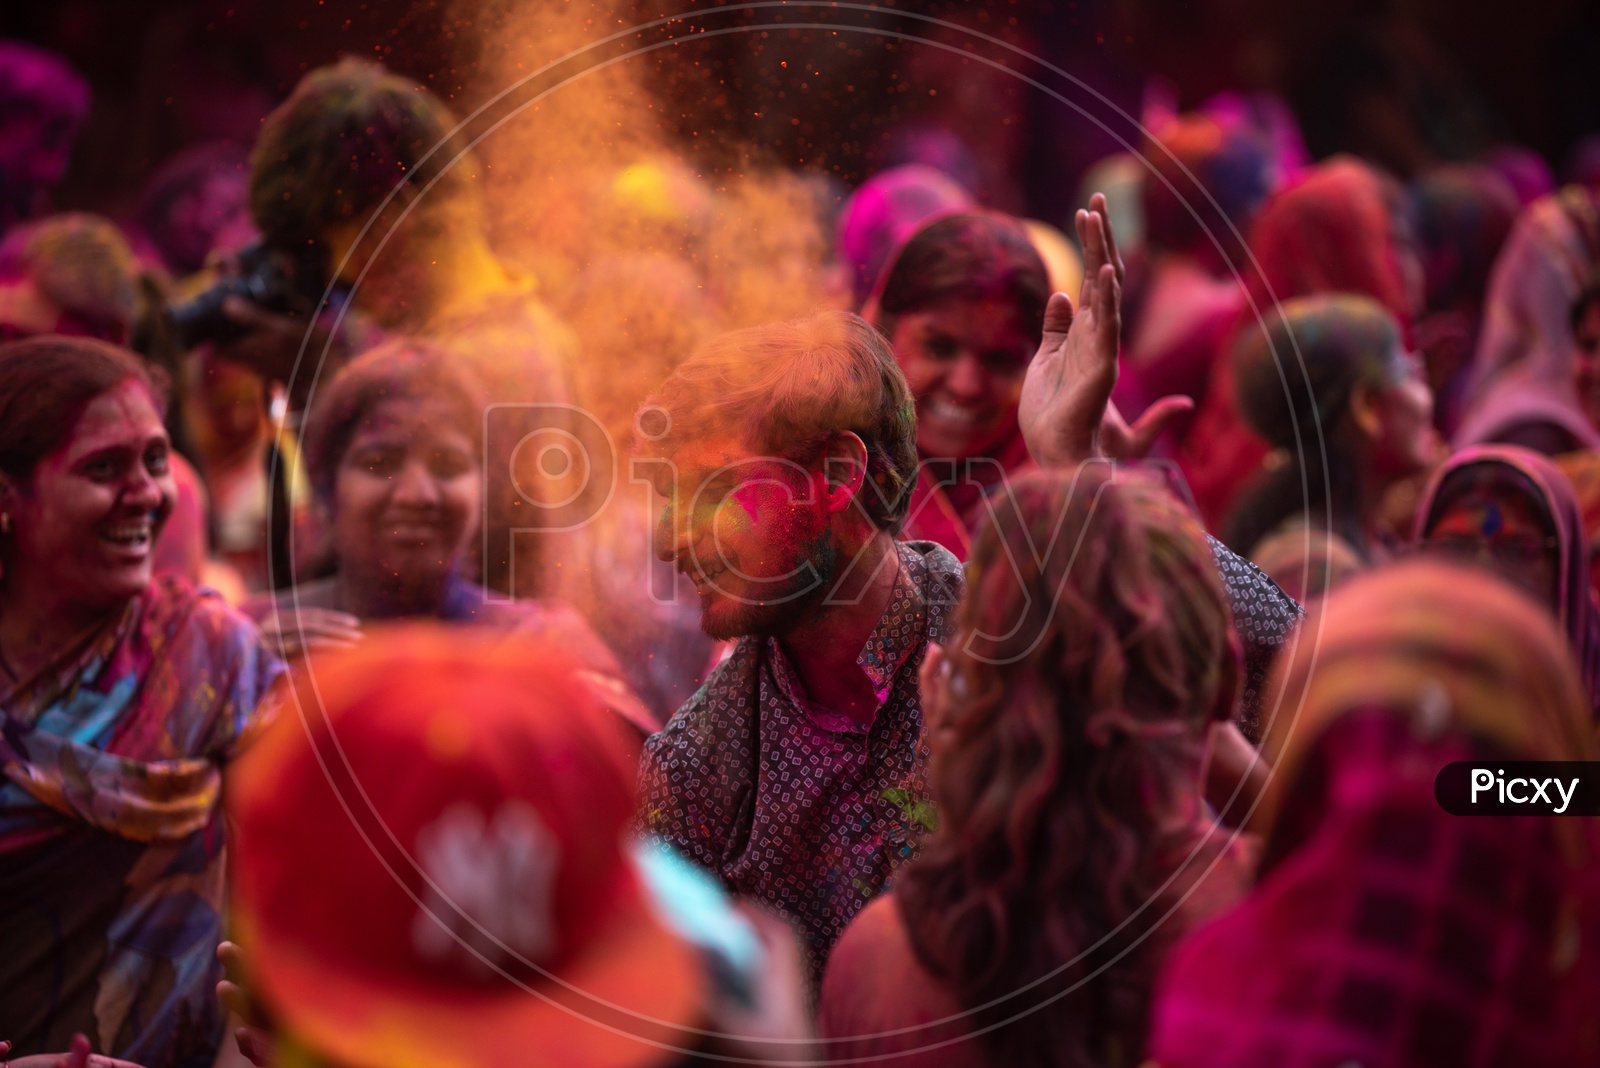 Marwari or Marwadi community celebrate Holi in Hyderabad on 21st March 2019